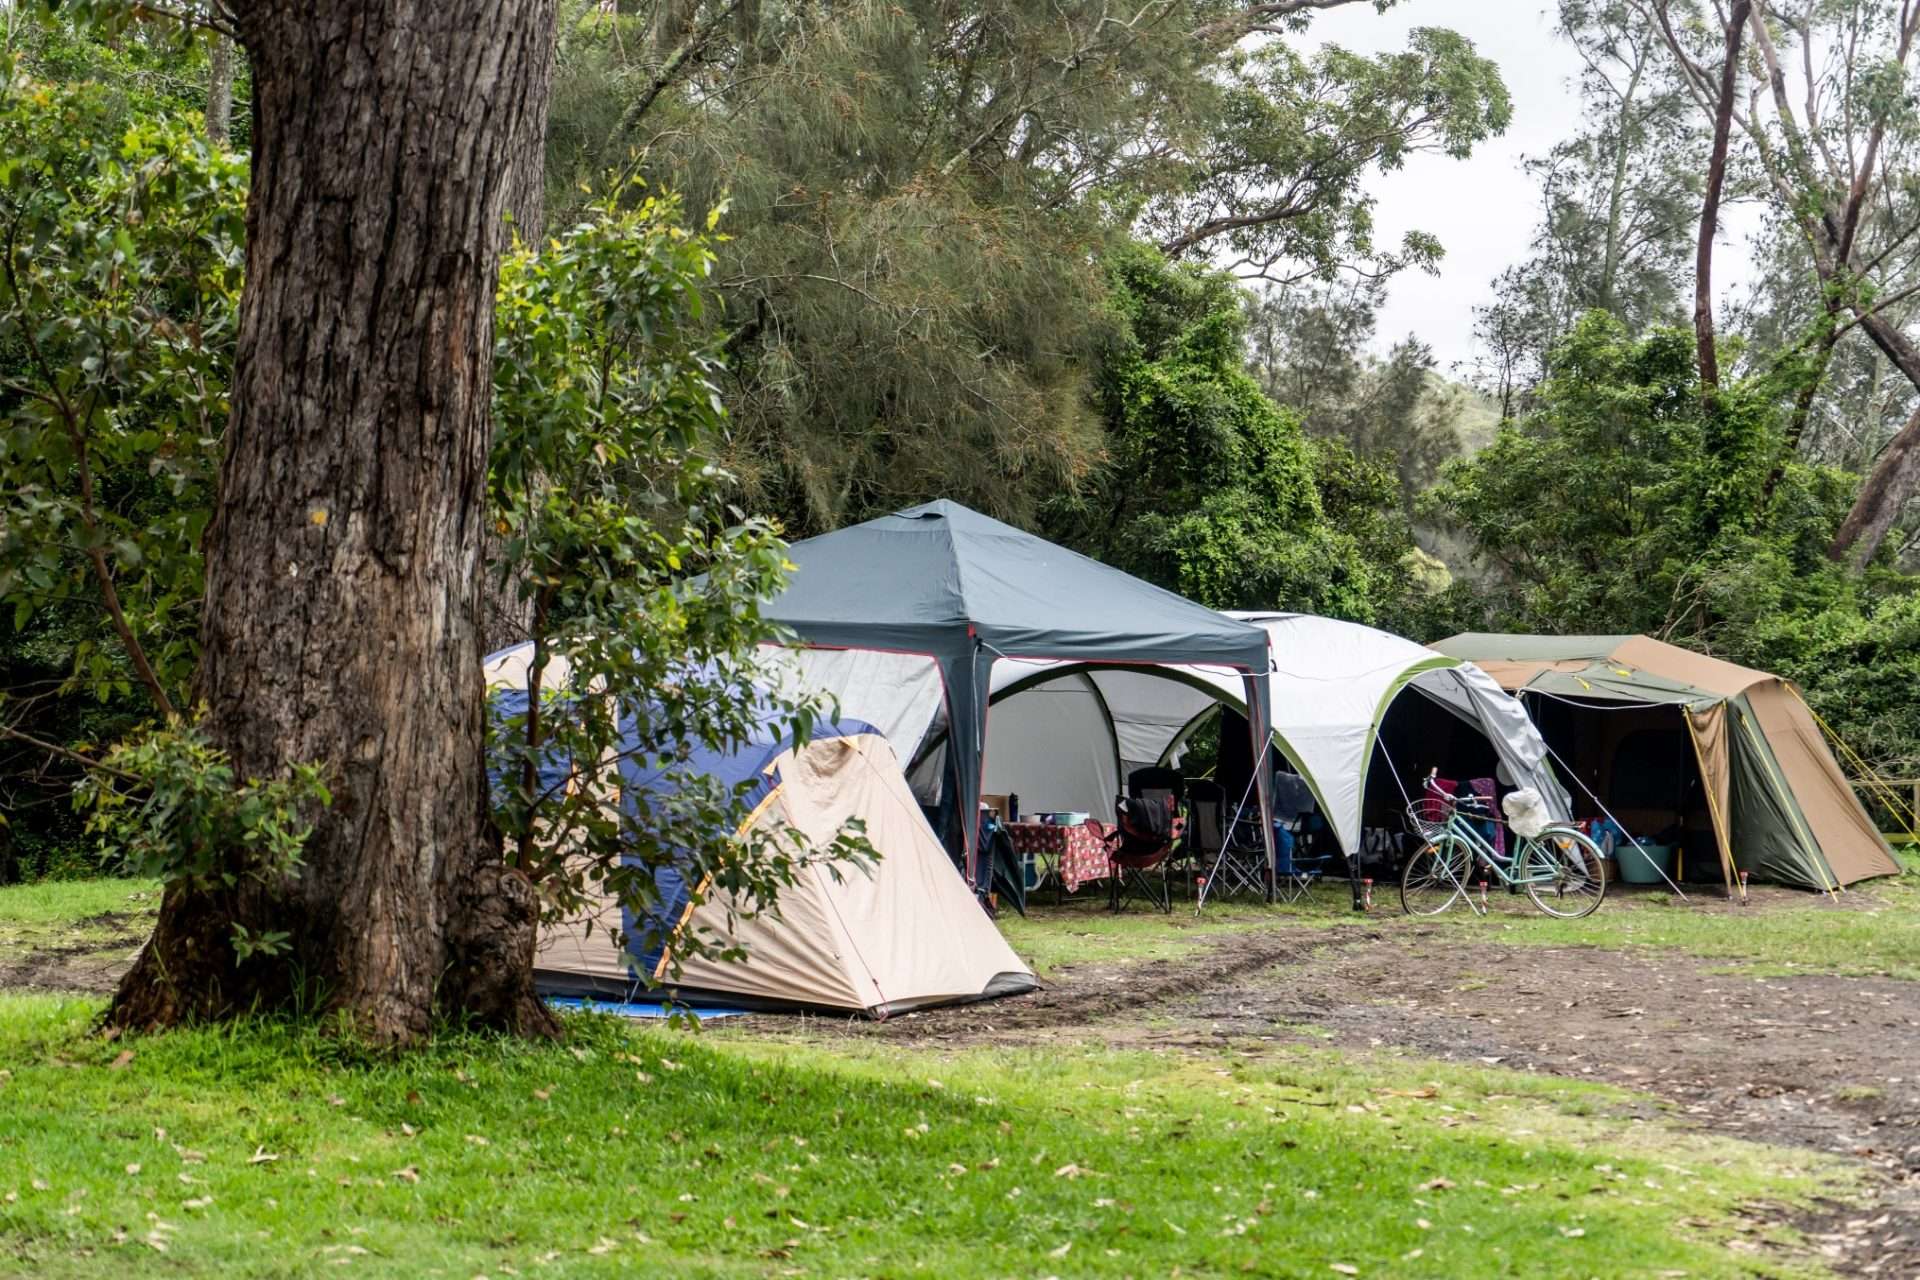 Four tents set up at campsite